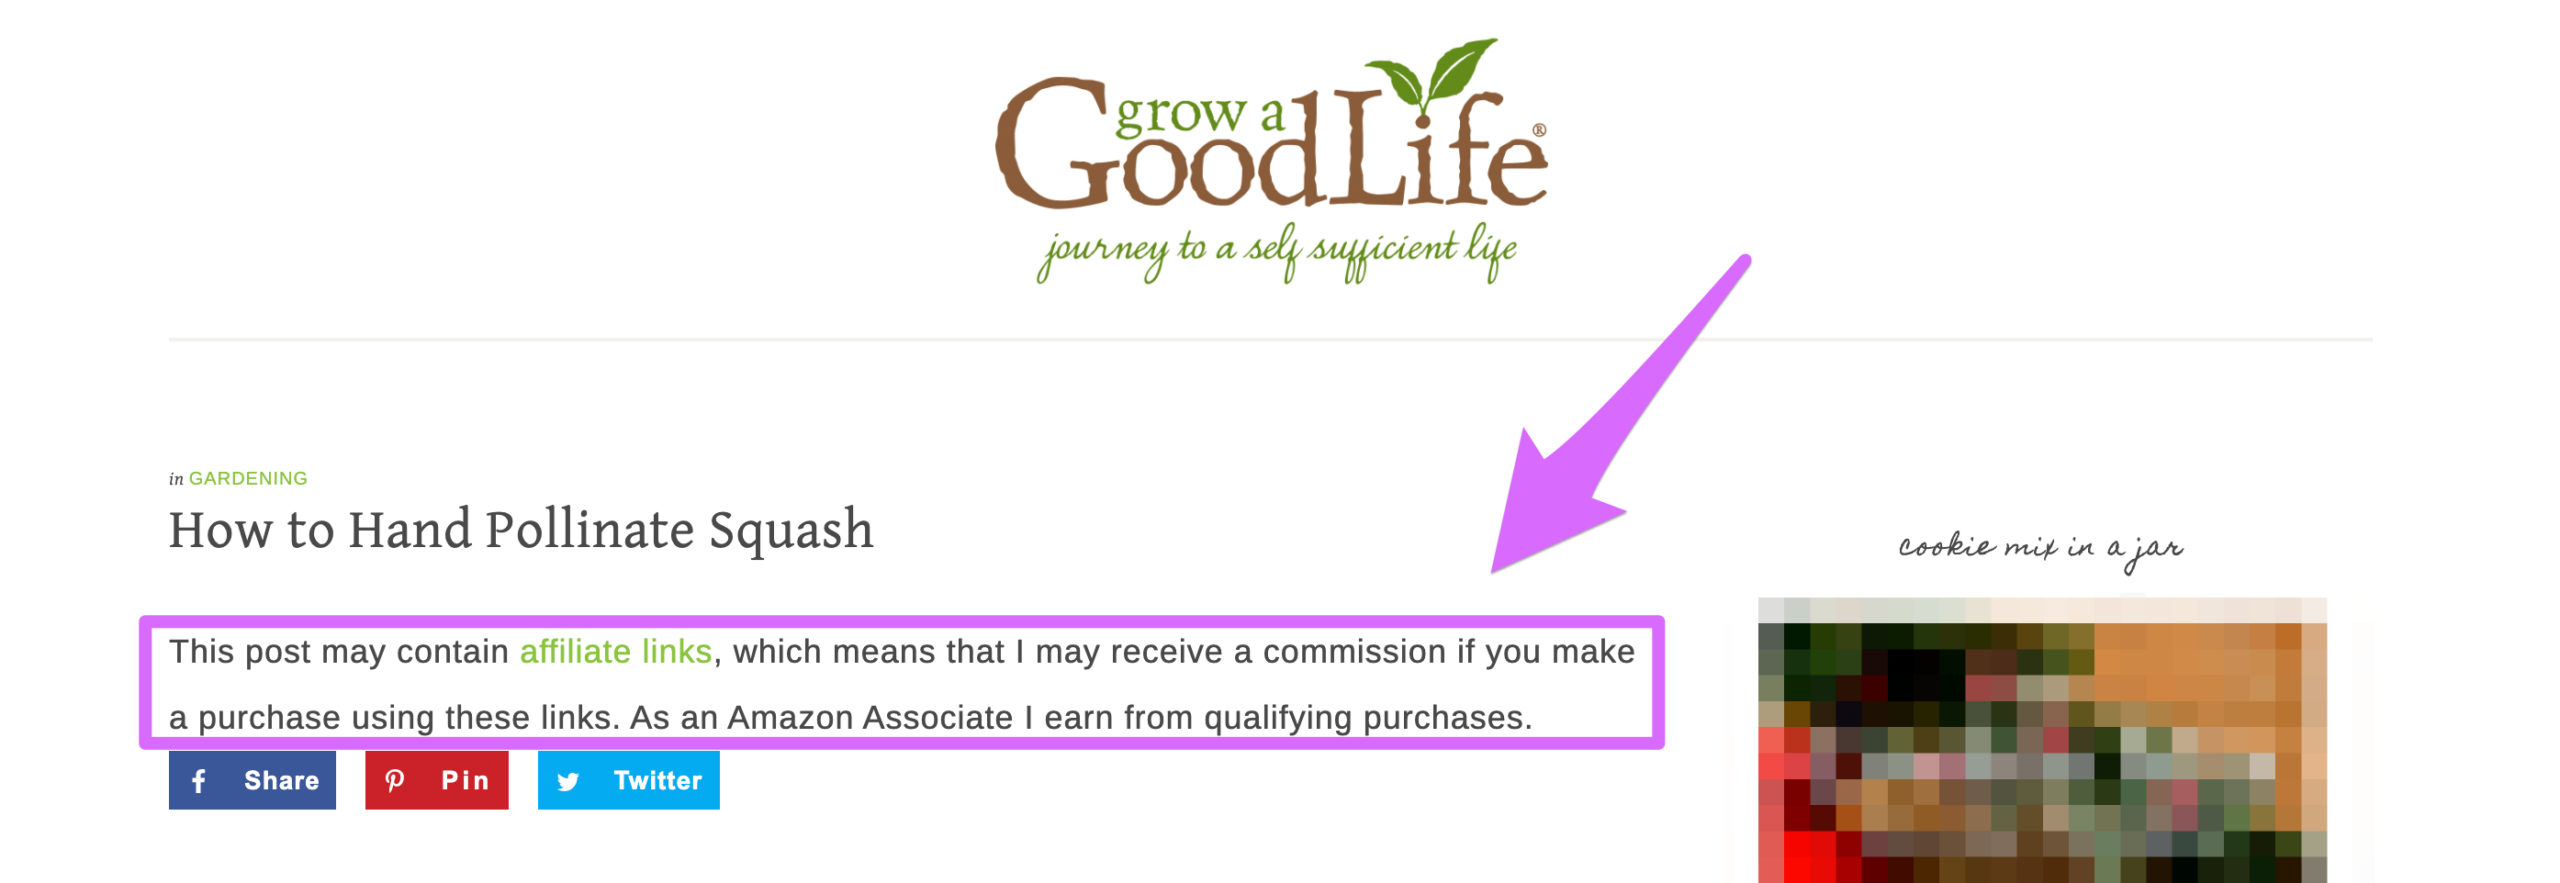 grow a good life disclaimer in header